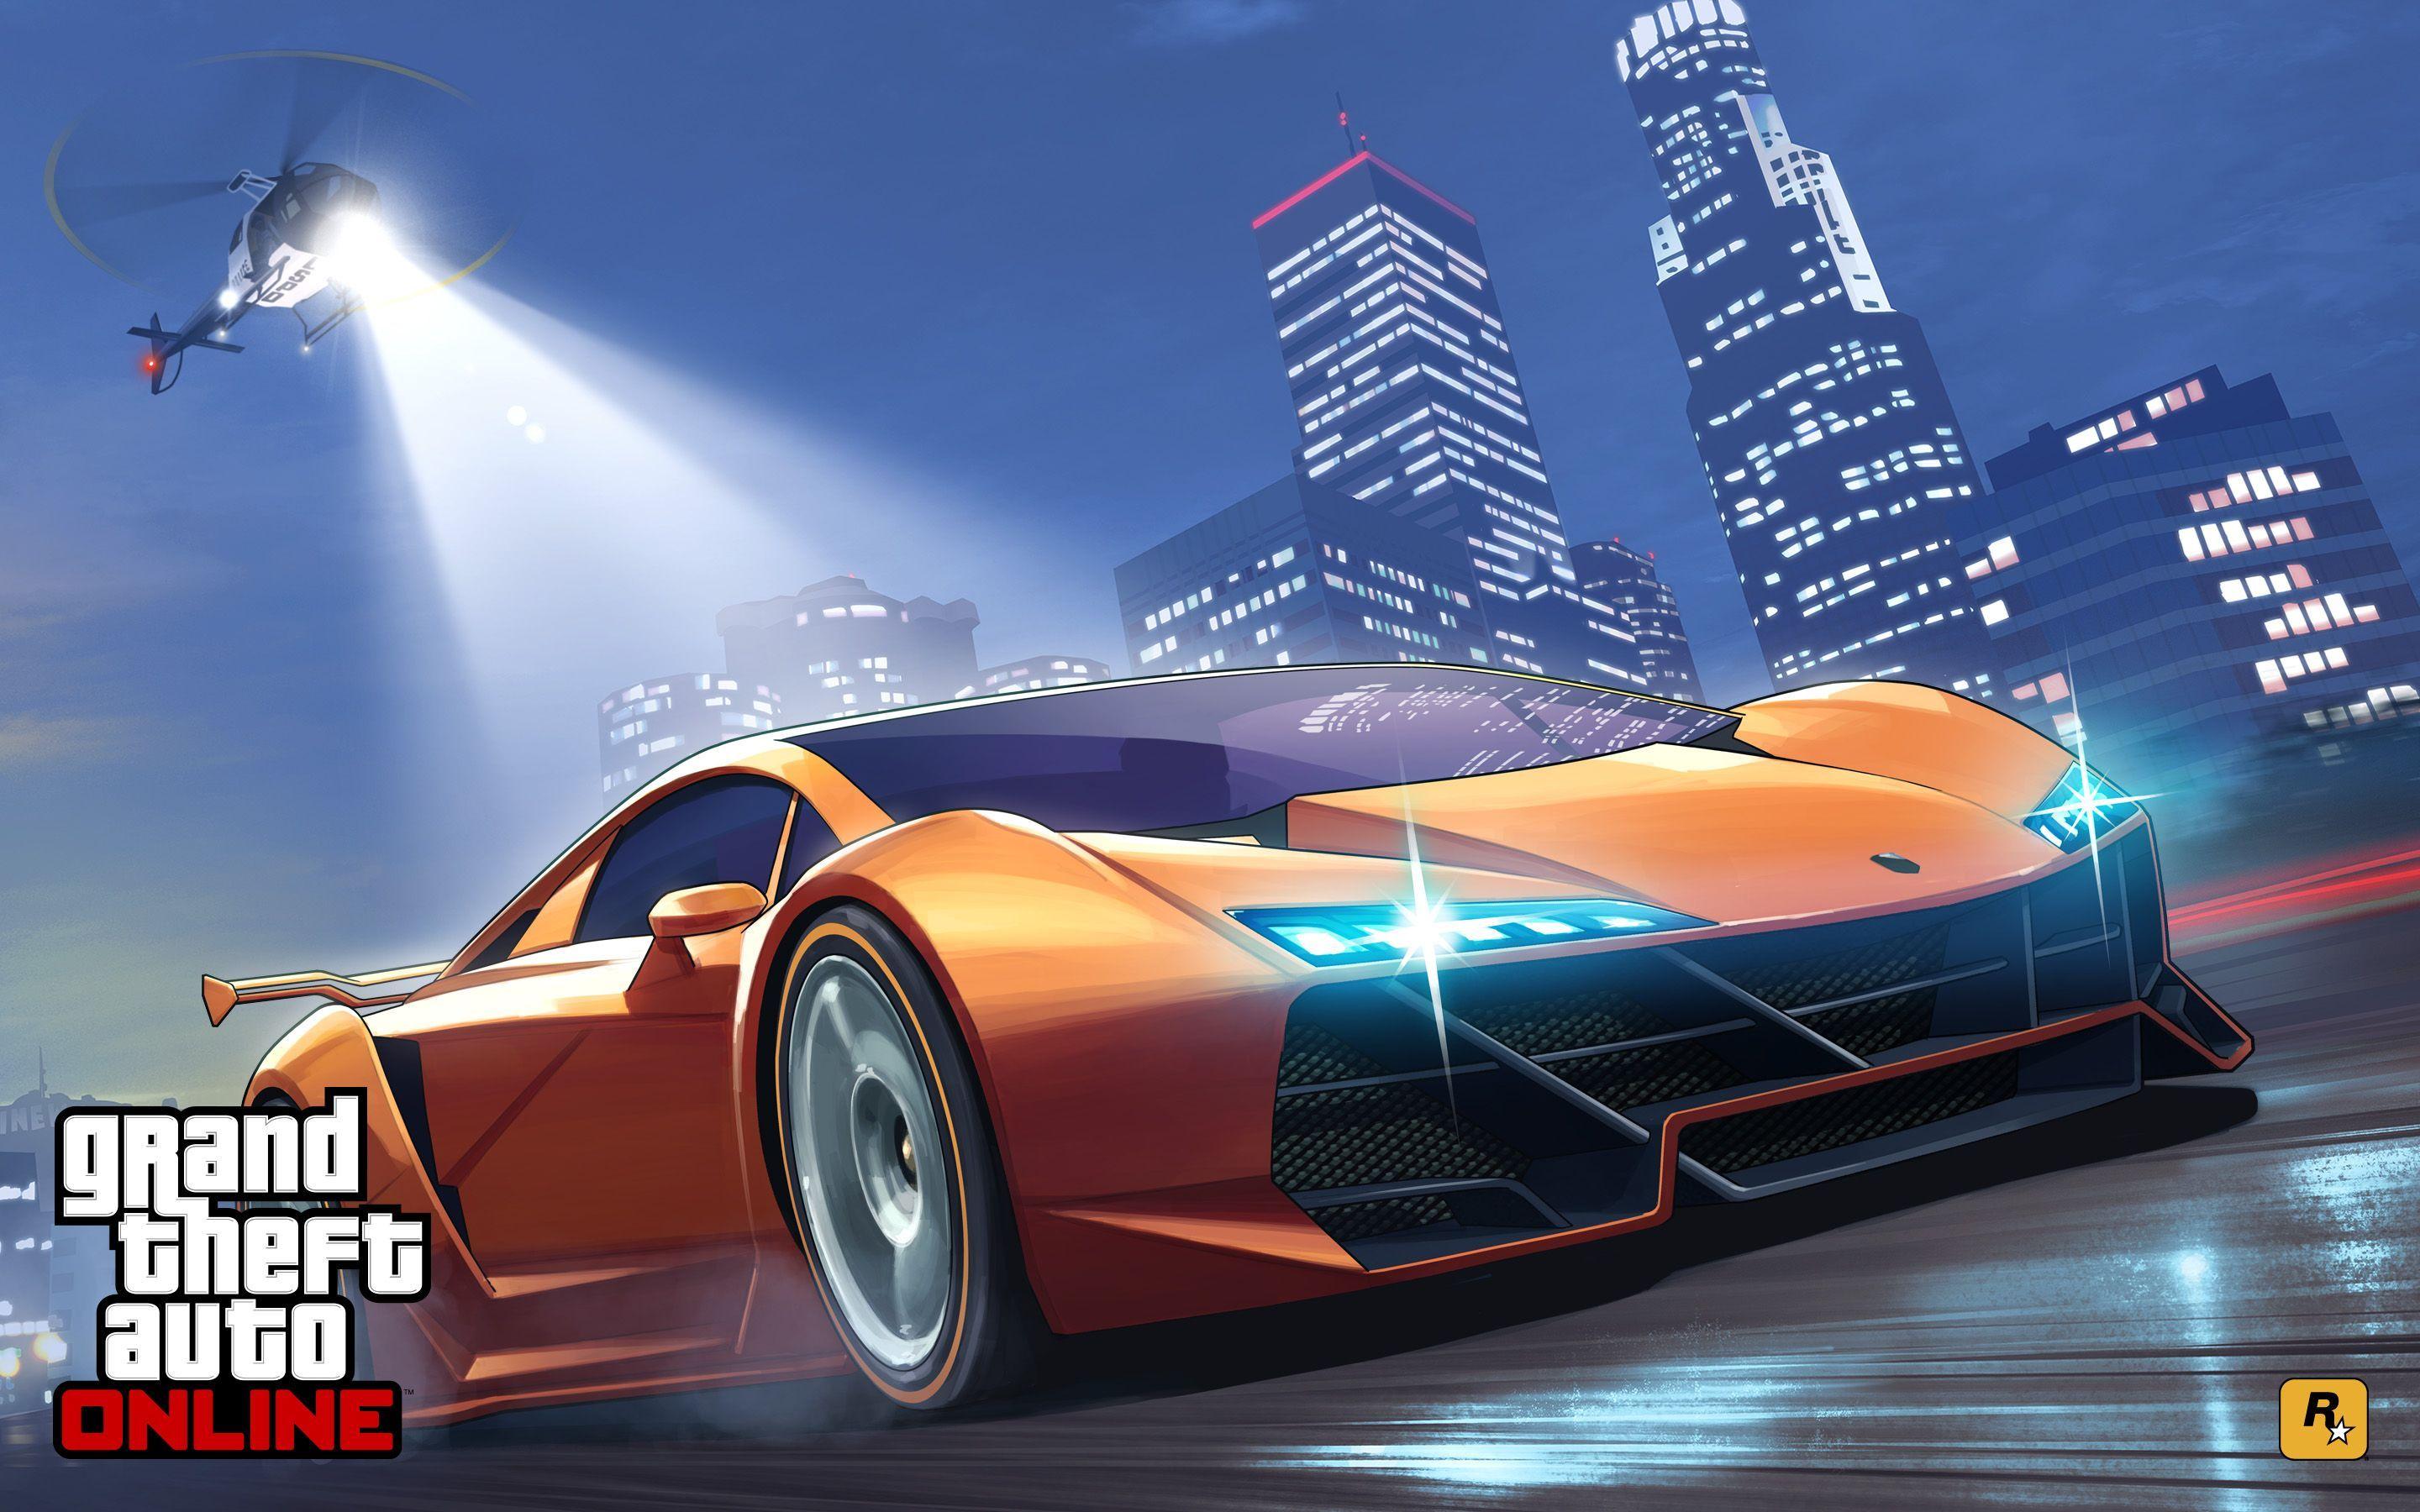 Grand Theft Auto Online 2015. Exclusive Wallpaper Wallpaper. Grand theft auto, Gta cars, Gta